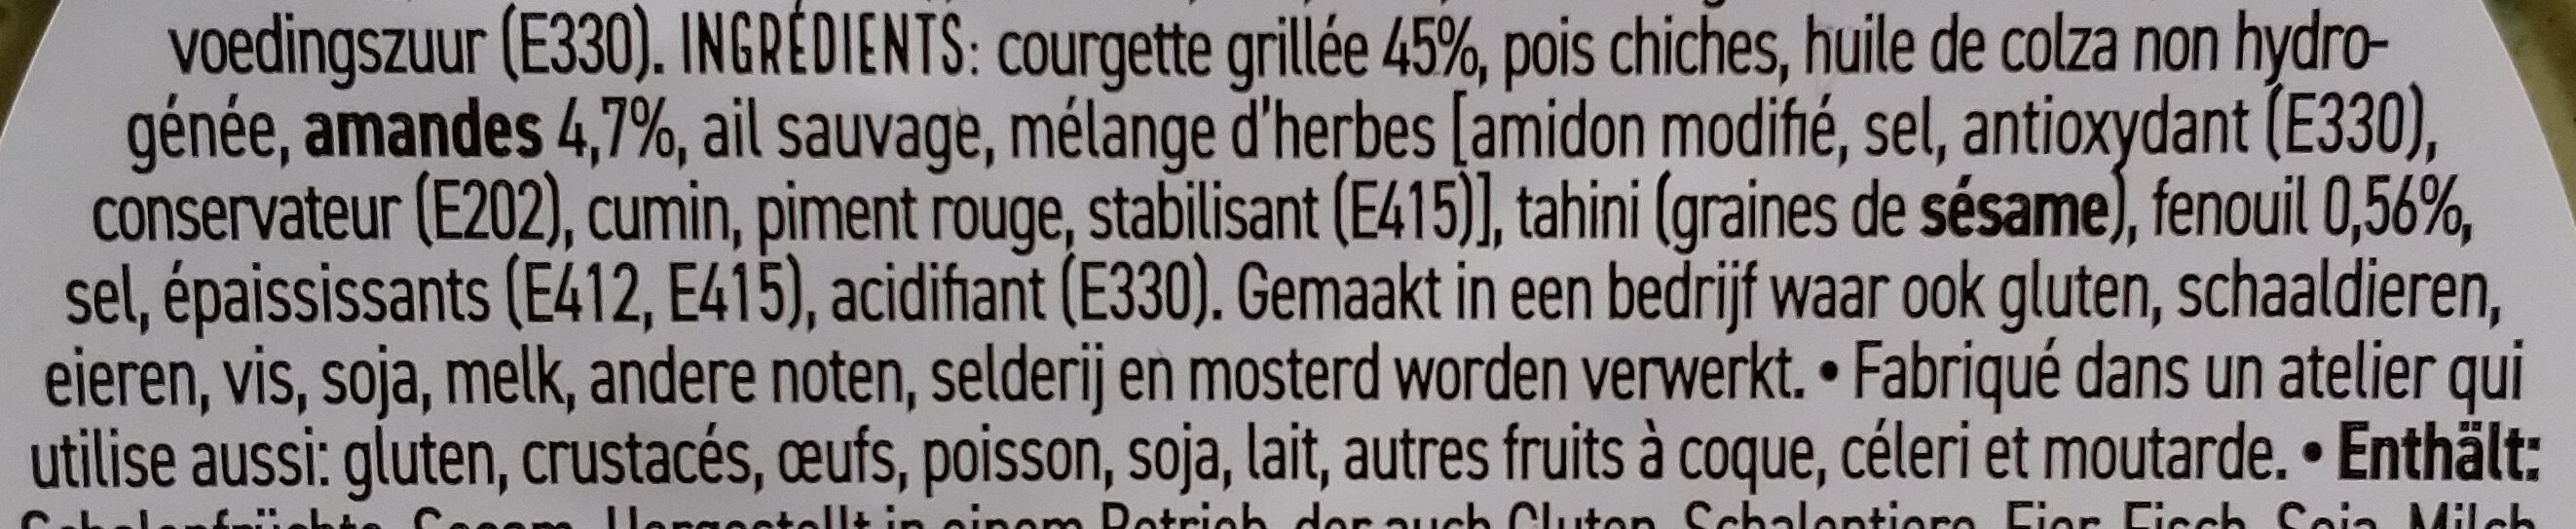 Gegrilde courgette hummus - Ingrédients